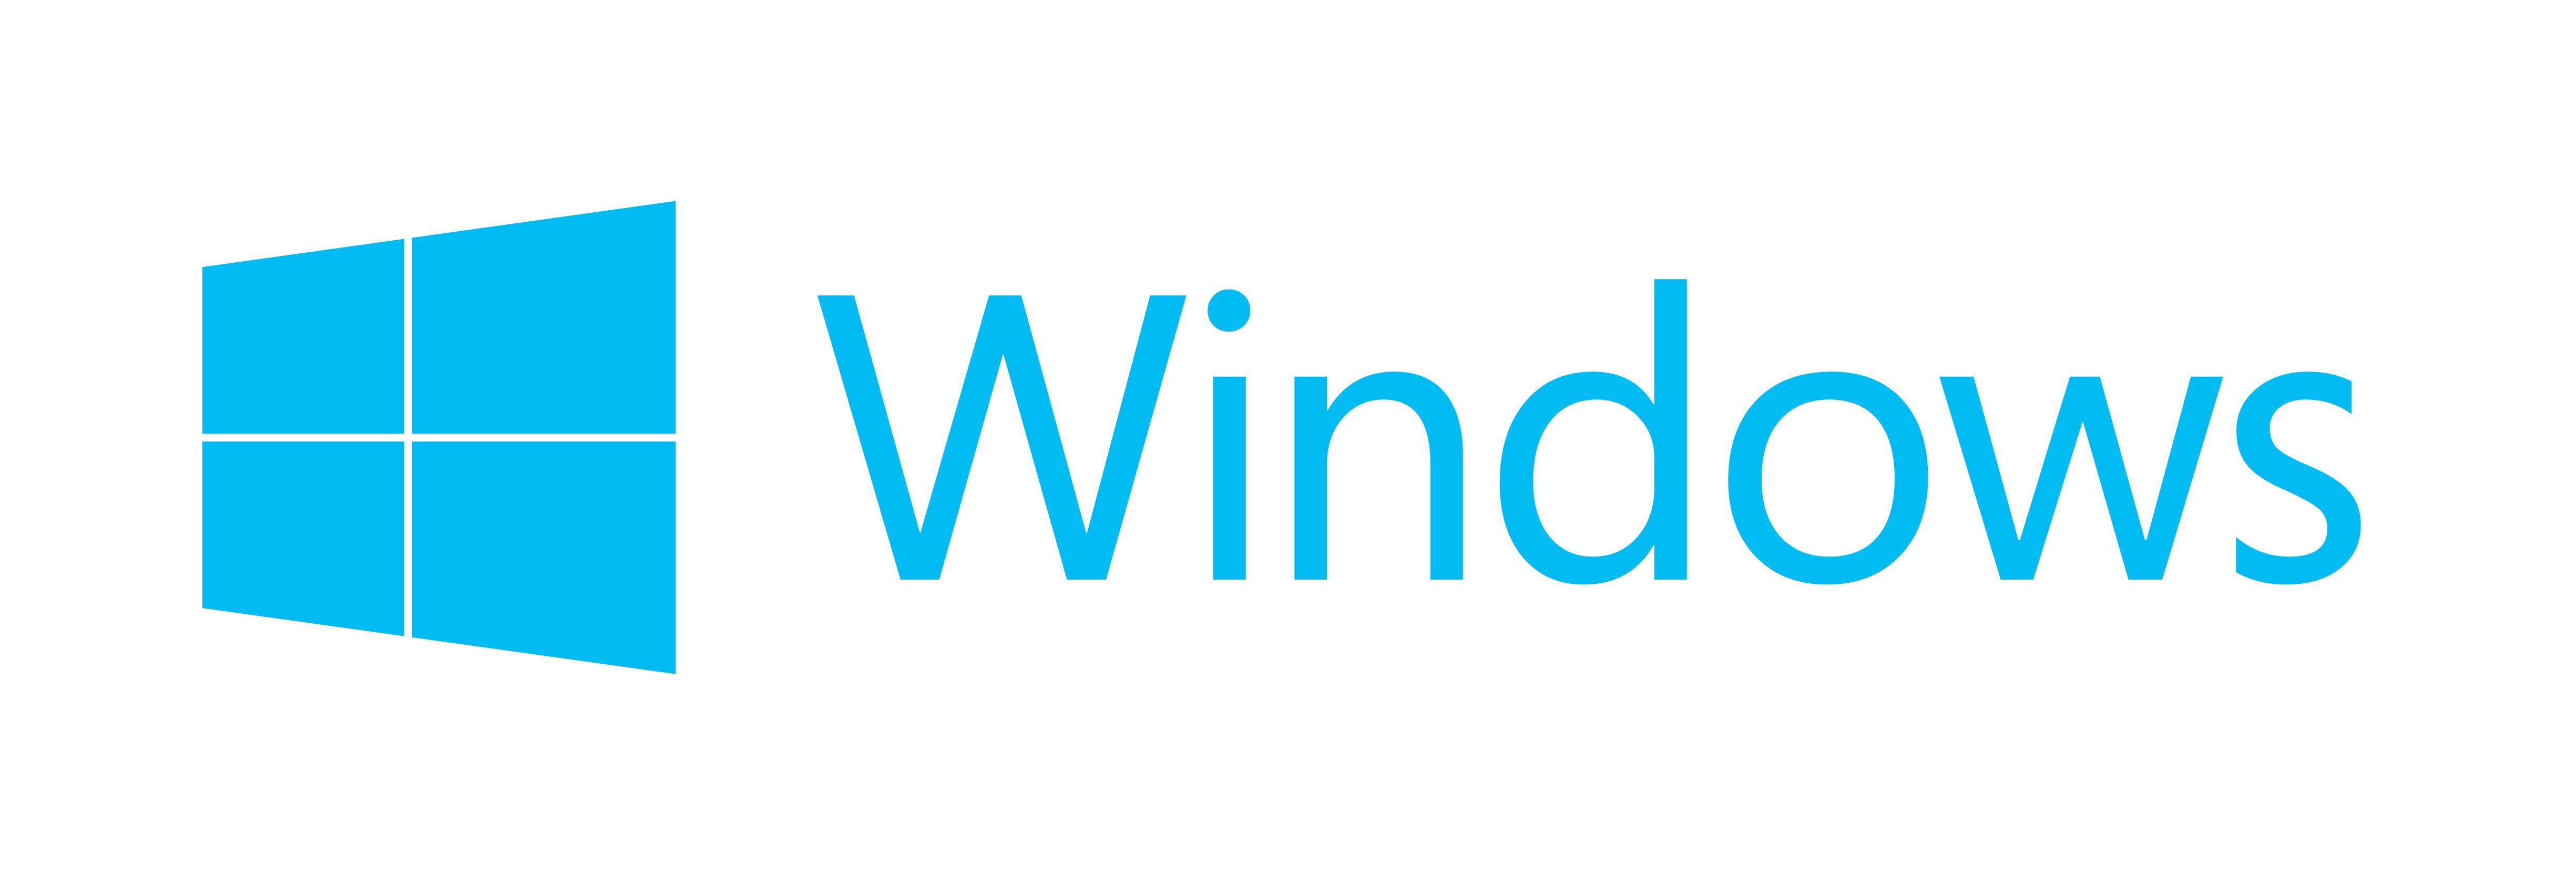 Windows Versions Logo - windows' tag wiki - Super User